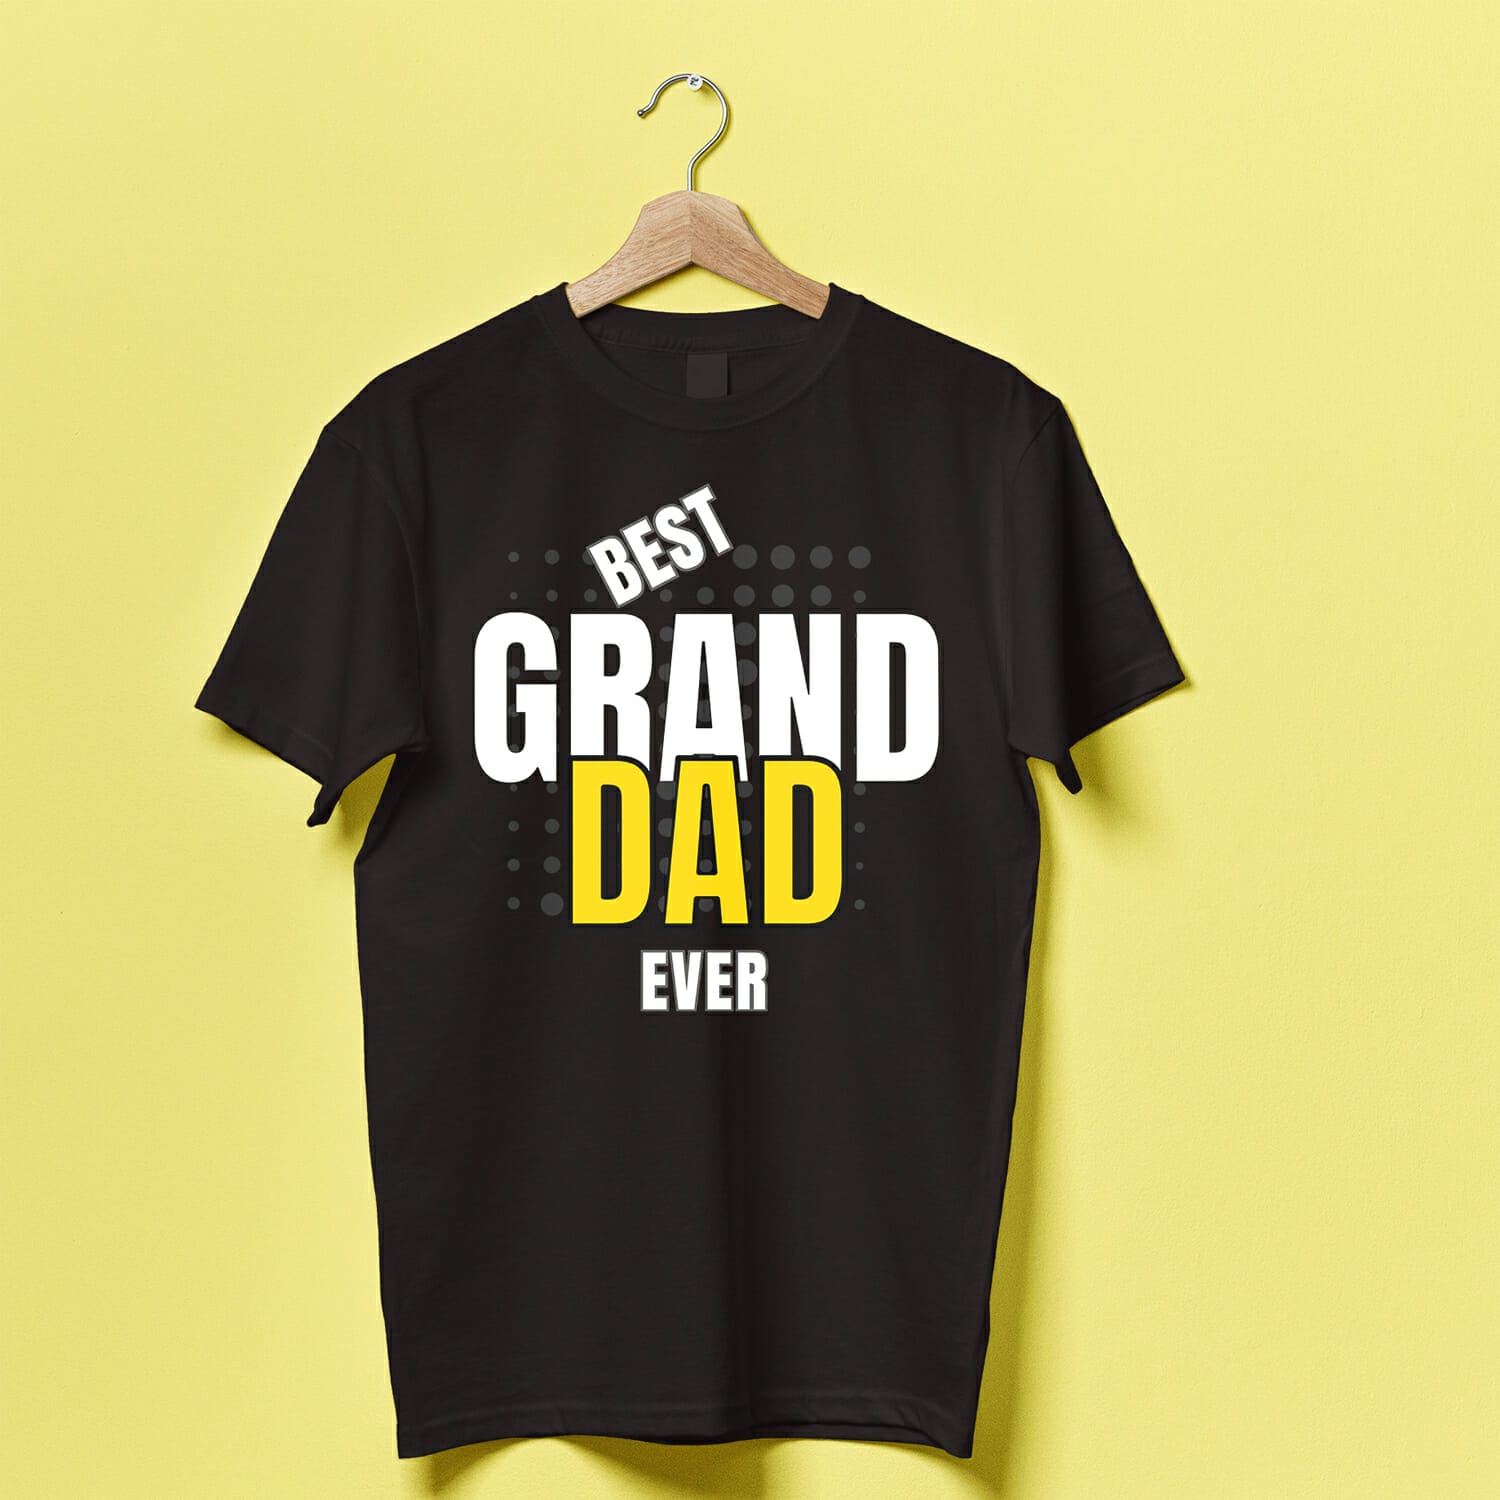 Best Grandad Ever T-shirt Design